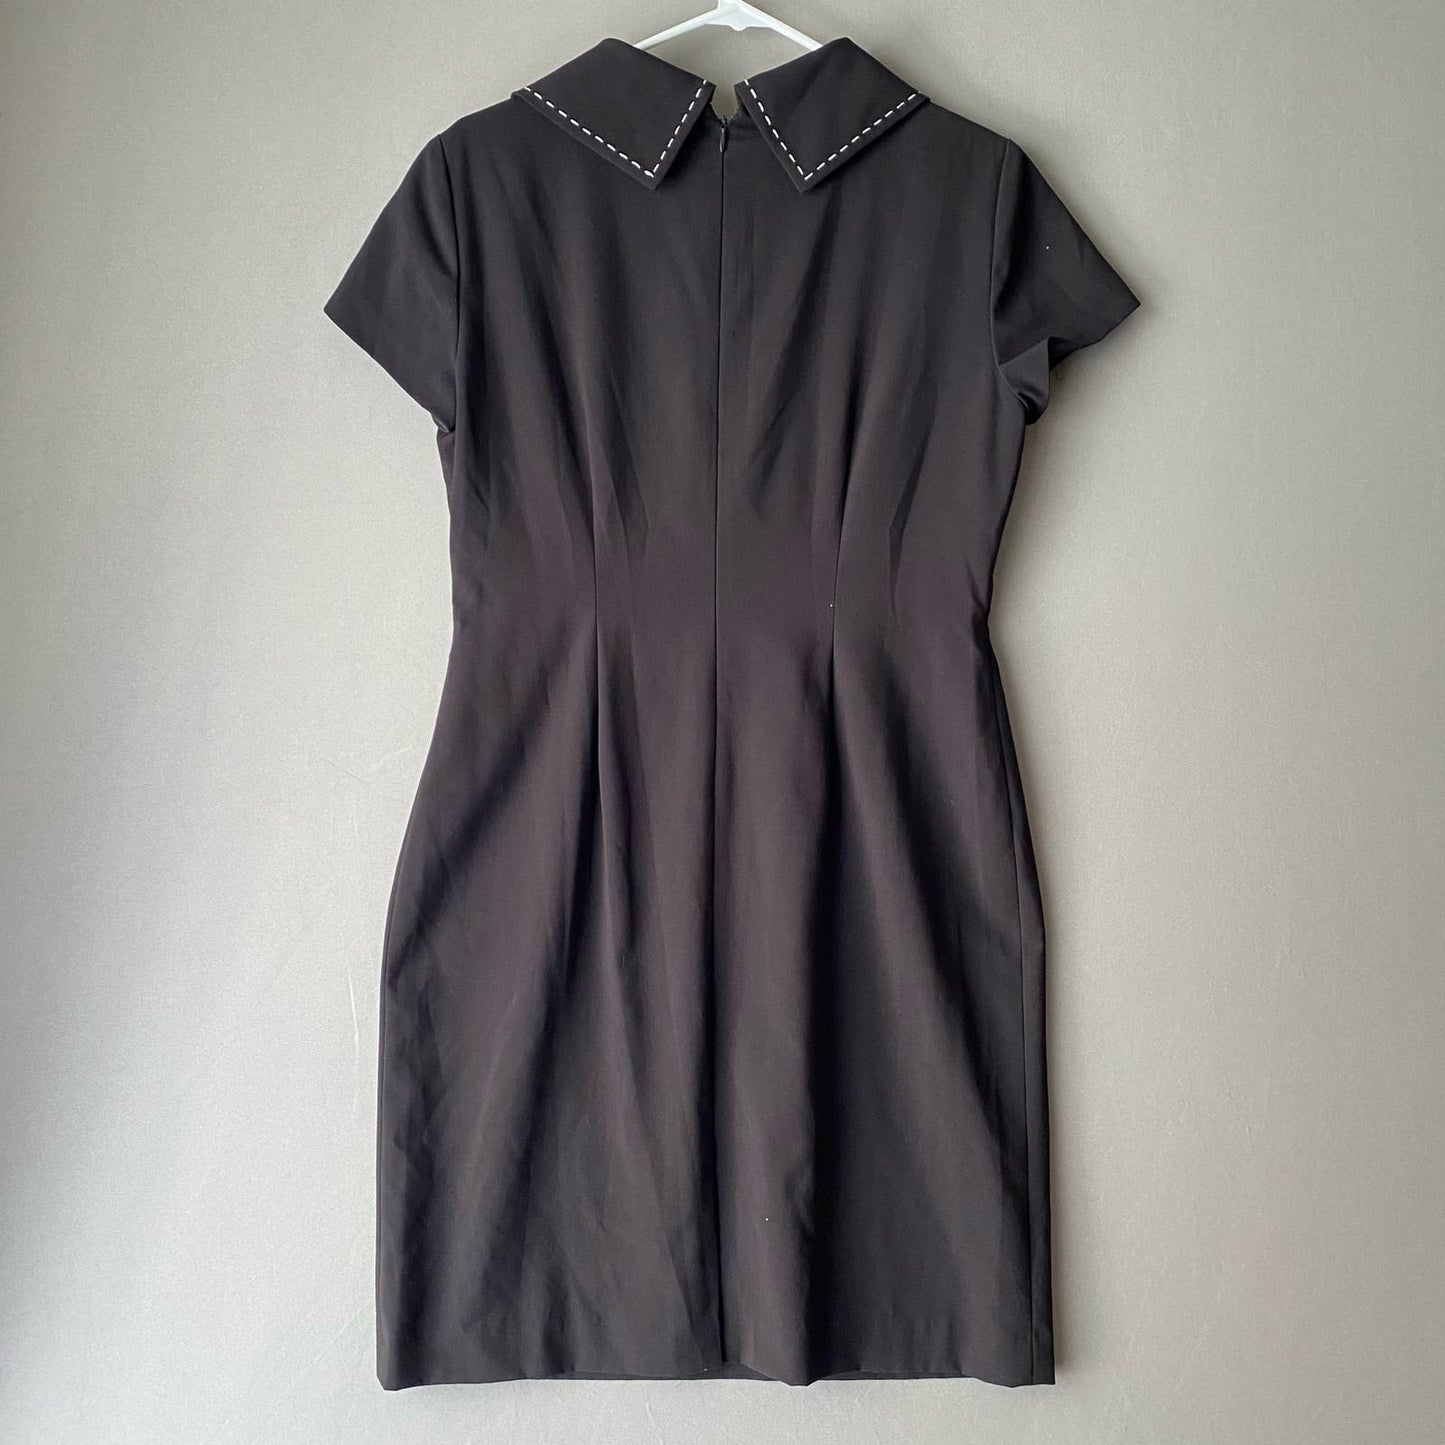 Tahari sz 8 mod sheath short sleeve dress